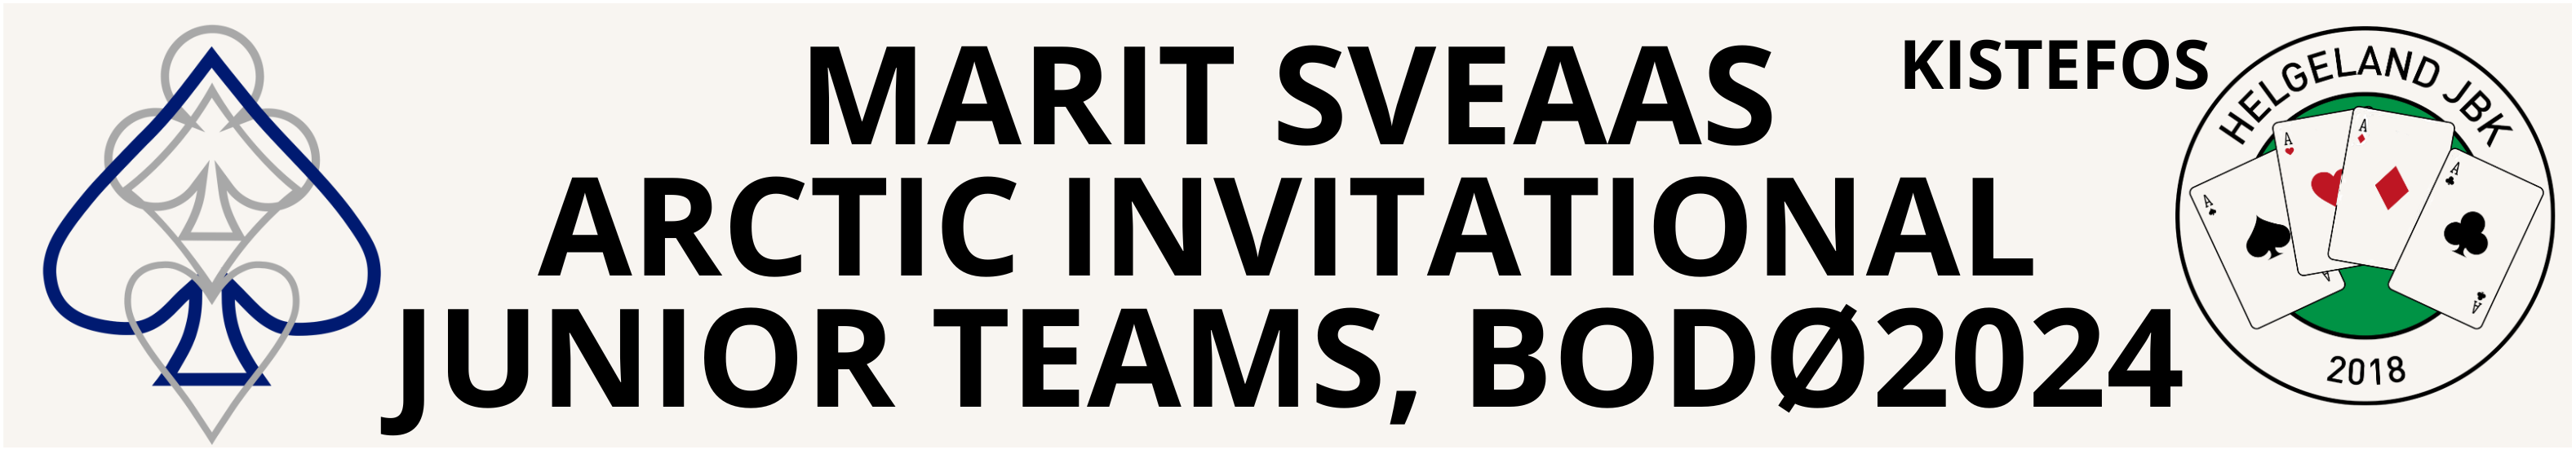 Results for Marit Sveaas Arctic Invitational Junior Teams tournament